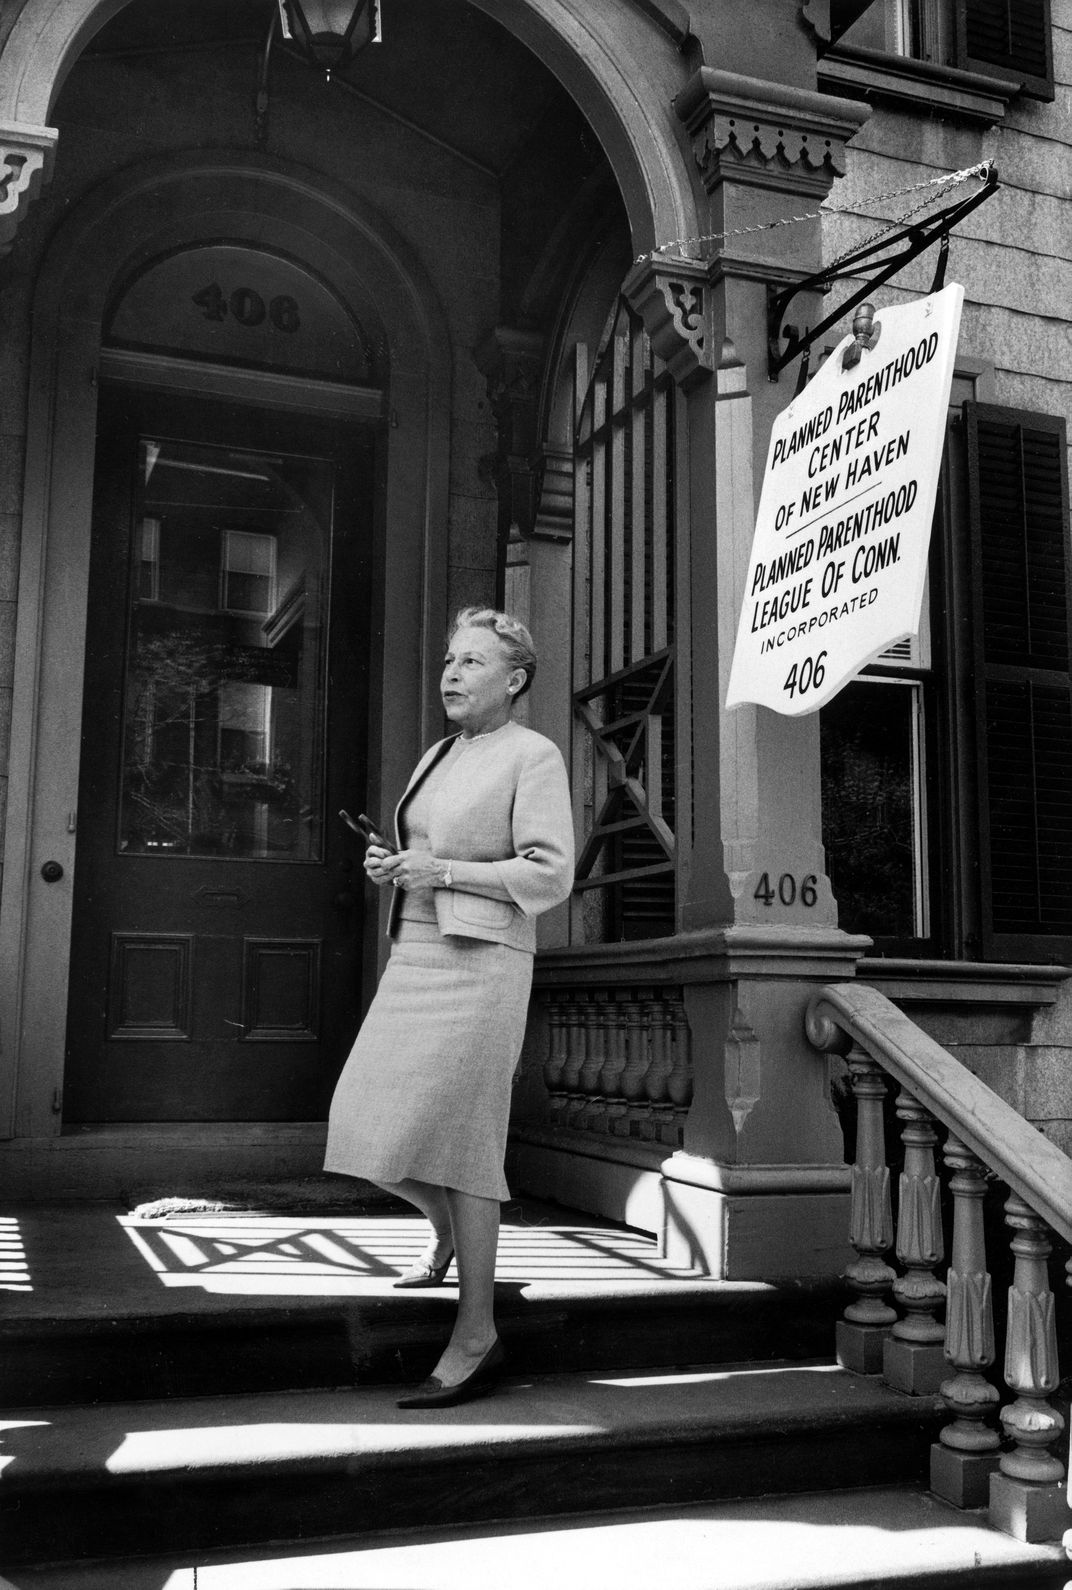 Estelle Griswold, April 1963 outside the Planned Parenthood center